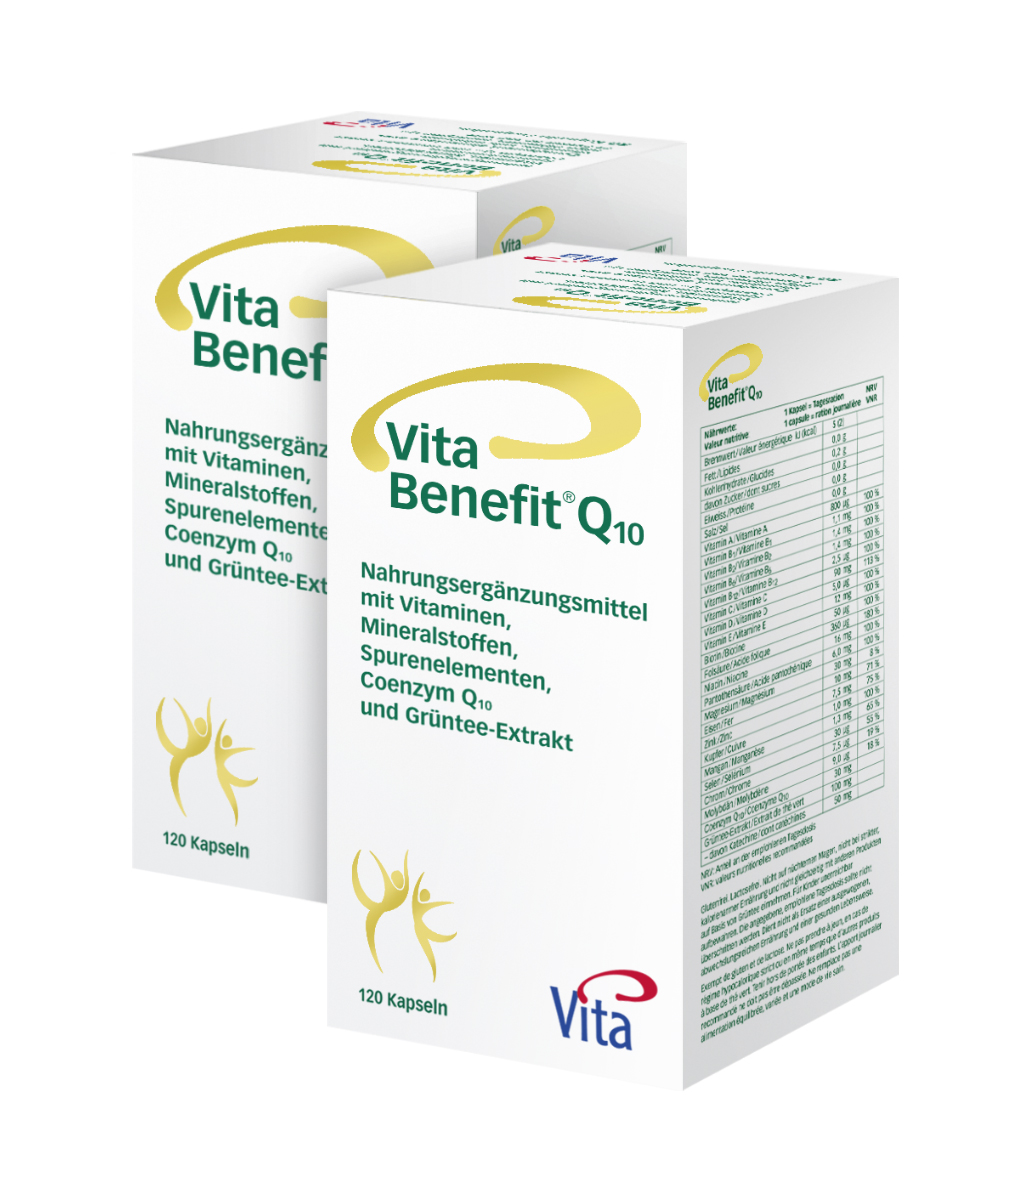  Vita Benefit® Q10  Double pack 